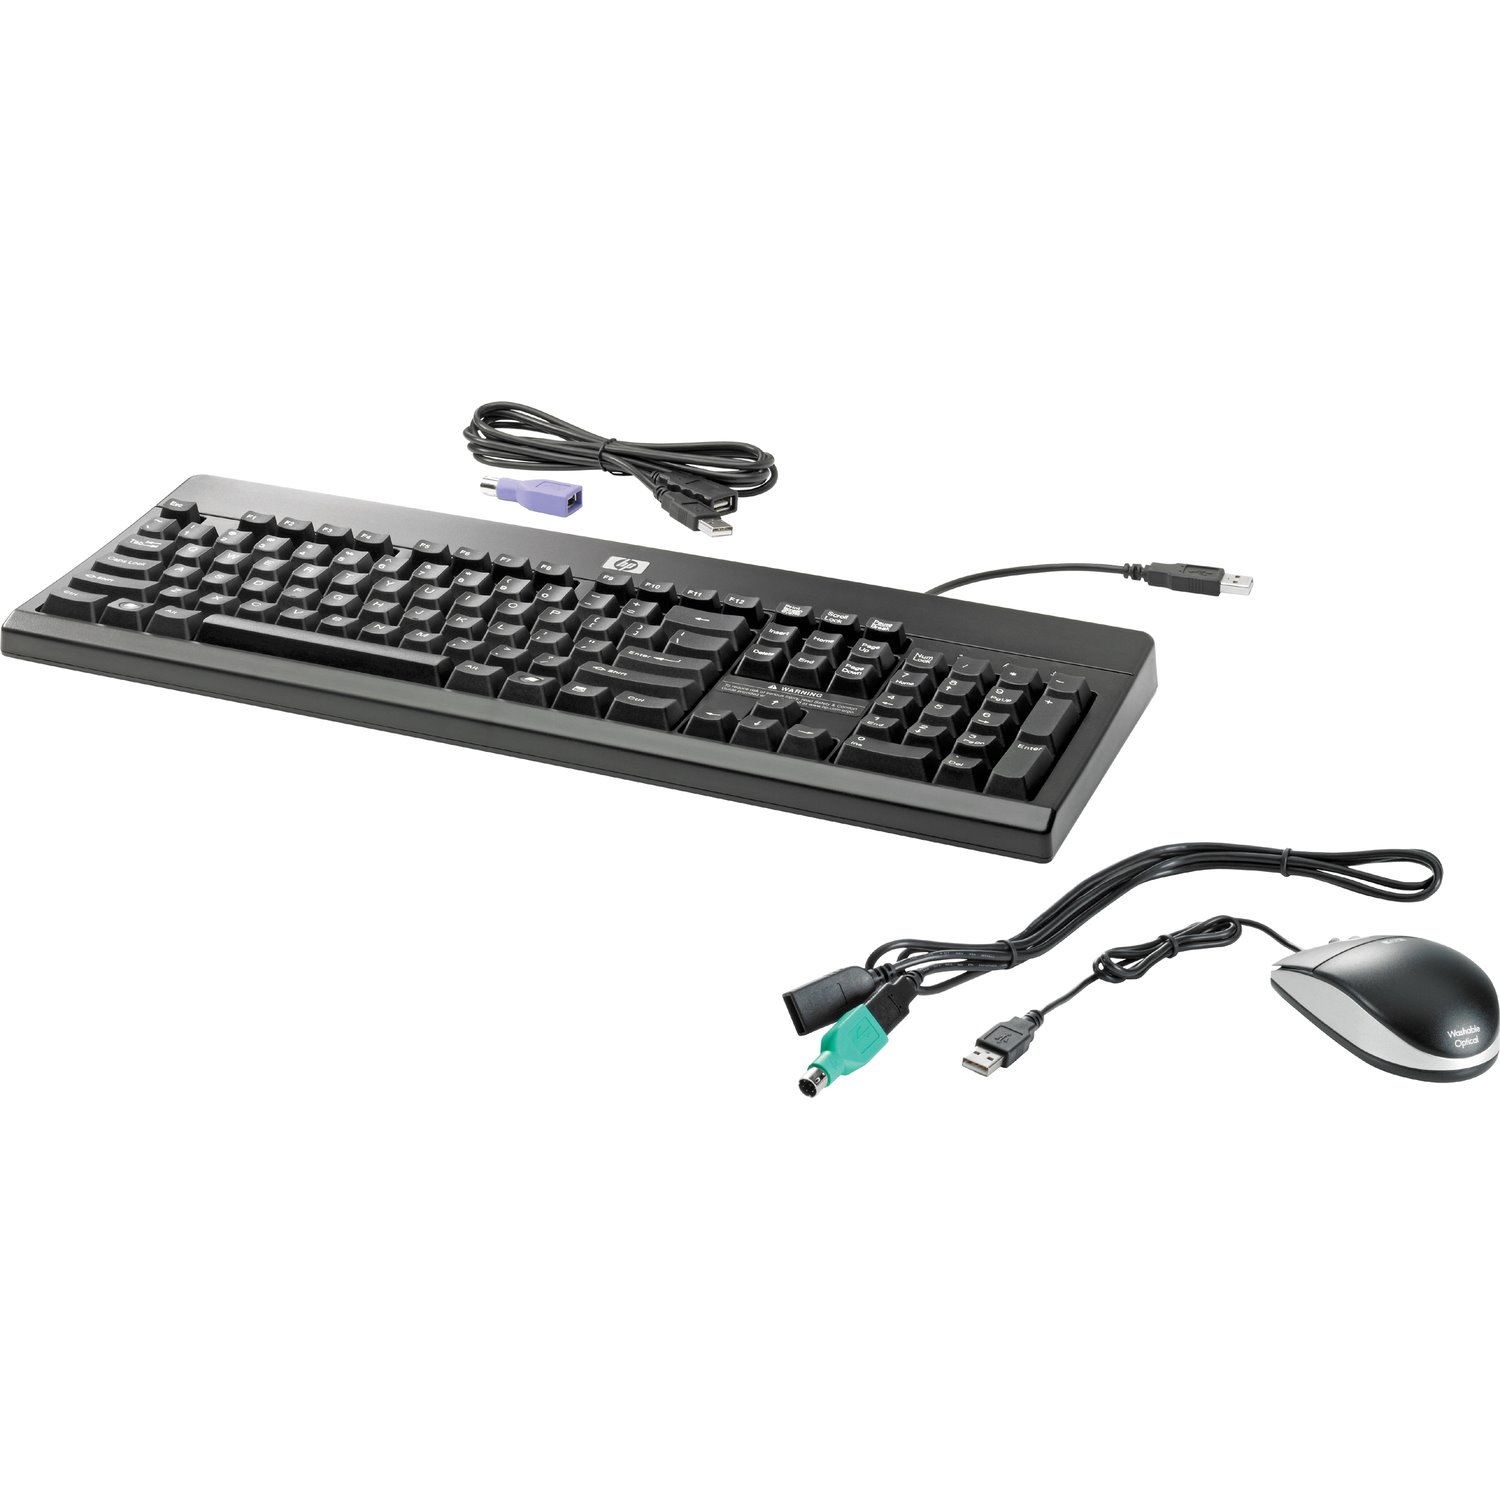 HP USB PS2 Washable Keyboard and Mouse BU207AT